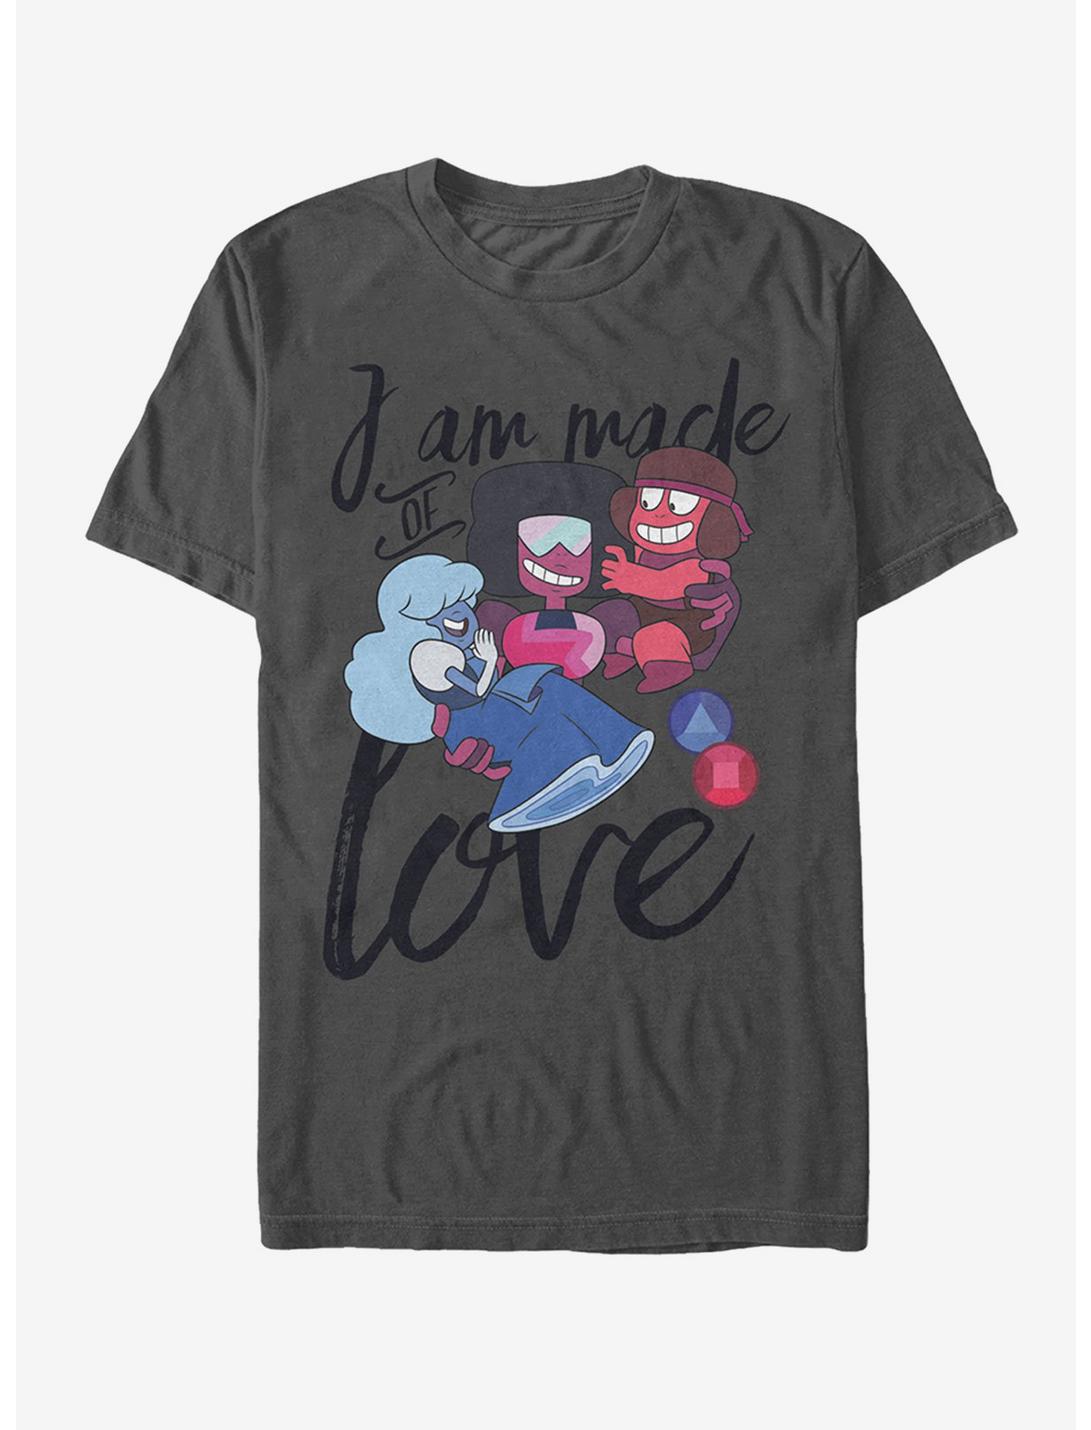 Steven Universe Made of Love T-Shirt, CHARCOAL, hi-res